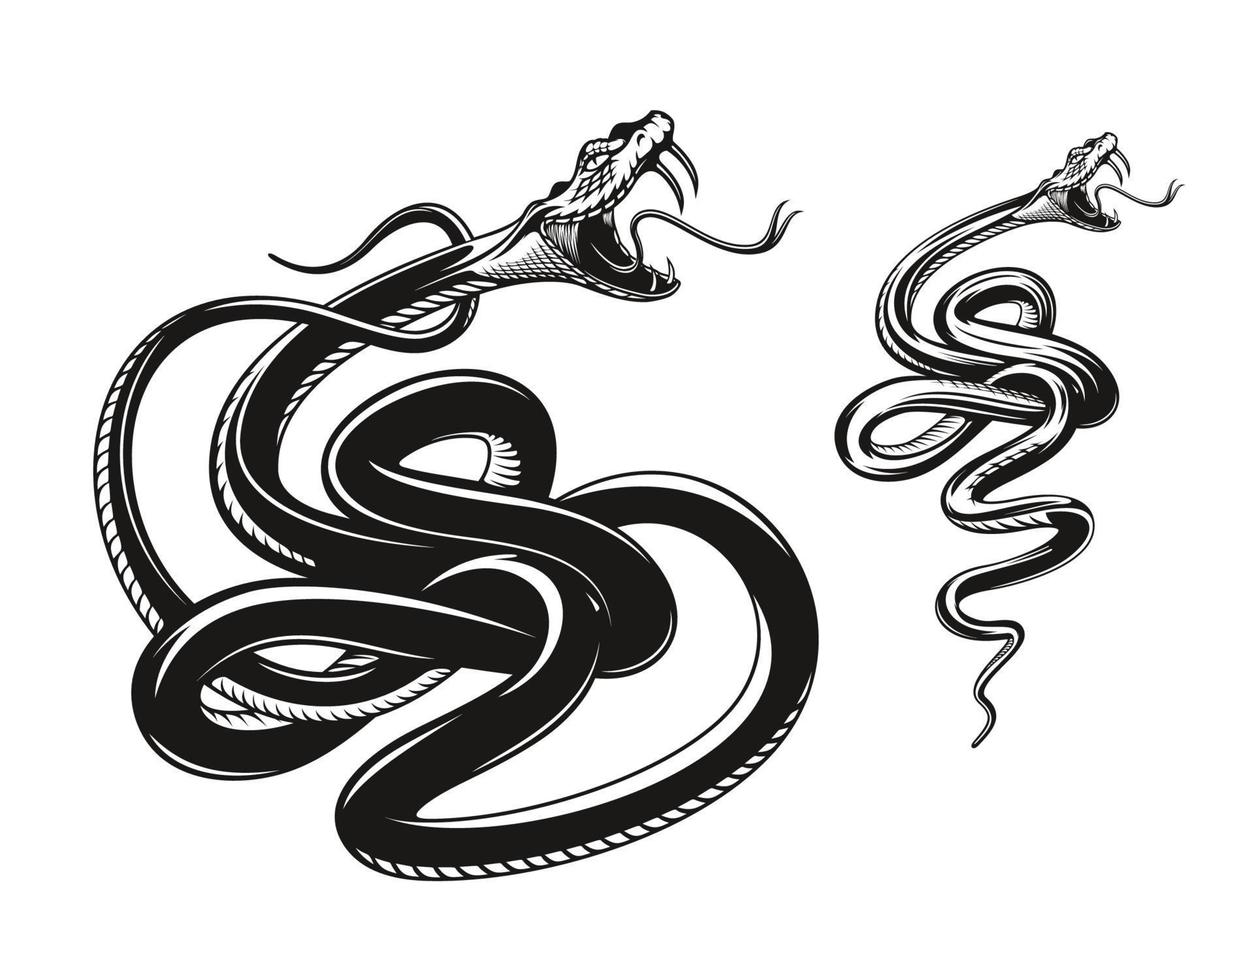 Tattoo Designs Ideas for Men and Women  Wonderful 3d cobra snake tattoo  design httpsbitlybesttattooswebsite  Facebook